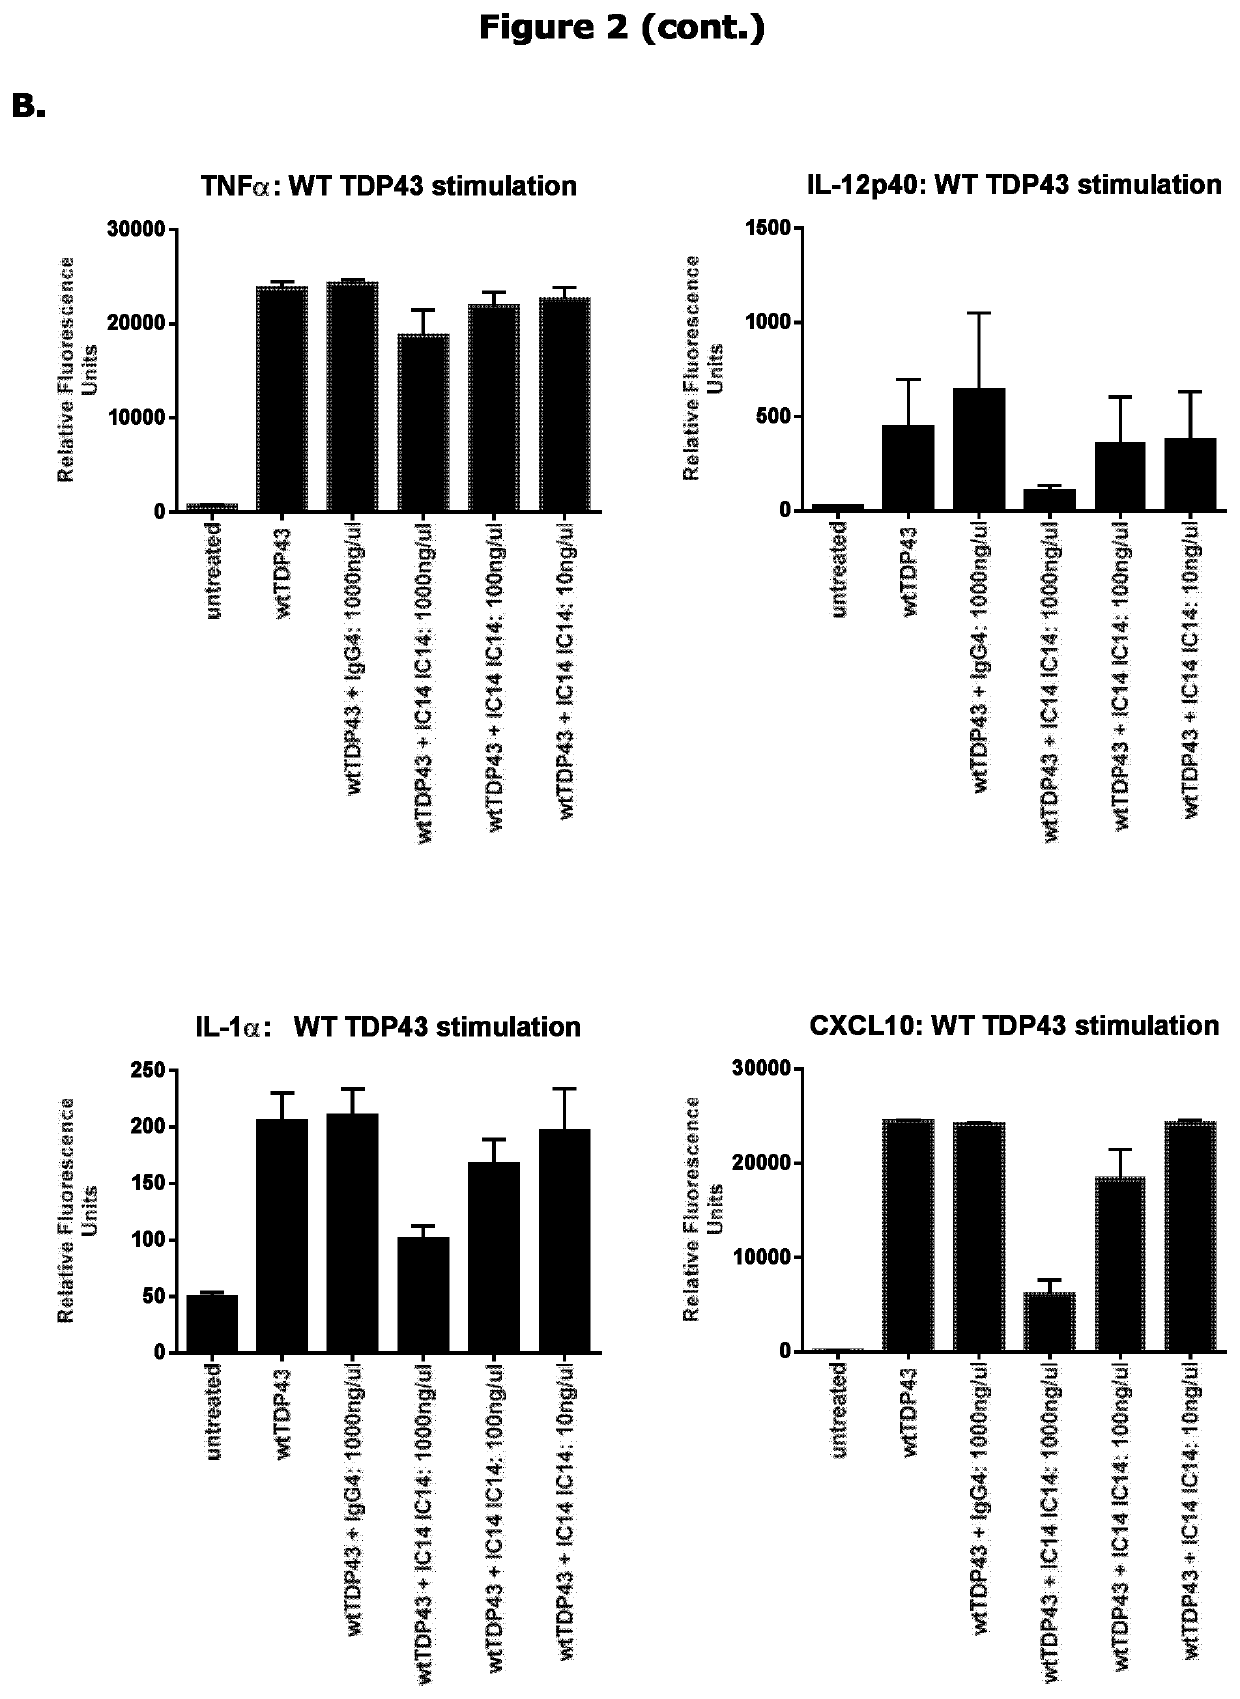 CD 14 antagonist antibodies for treating neurodegenerative diseases